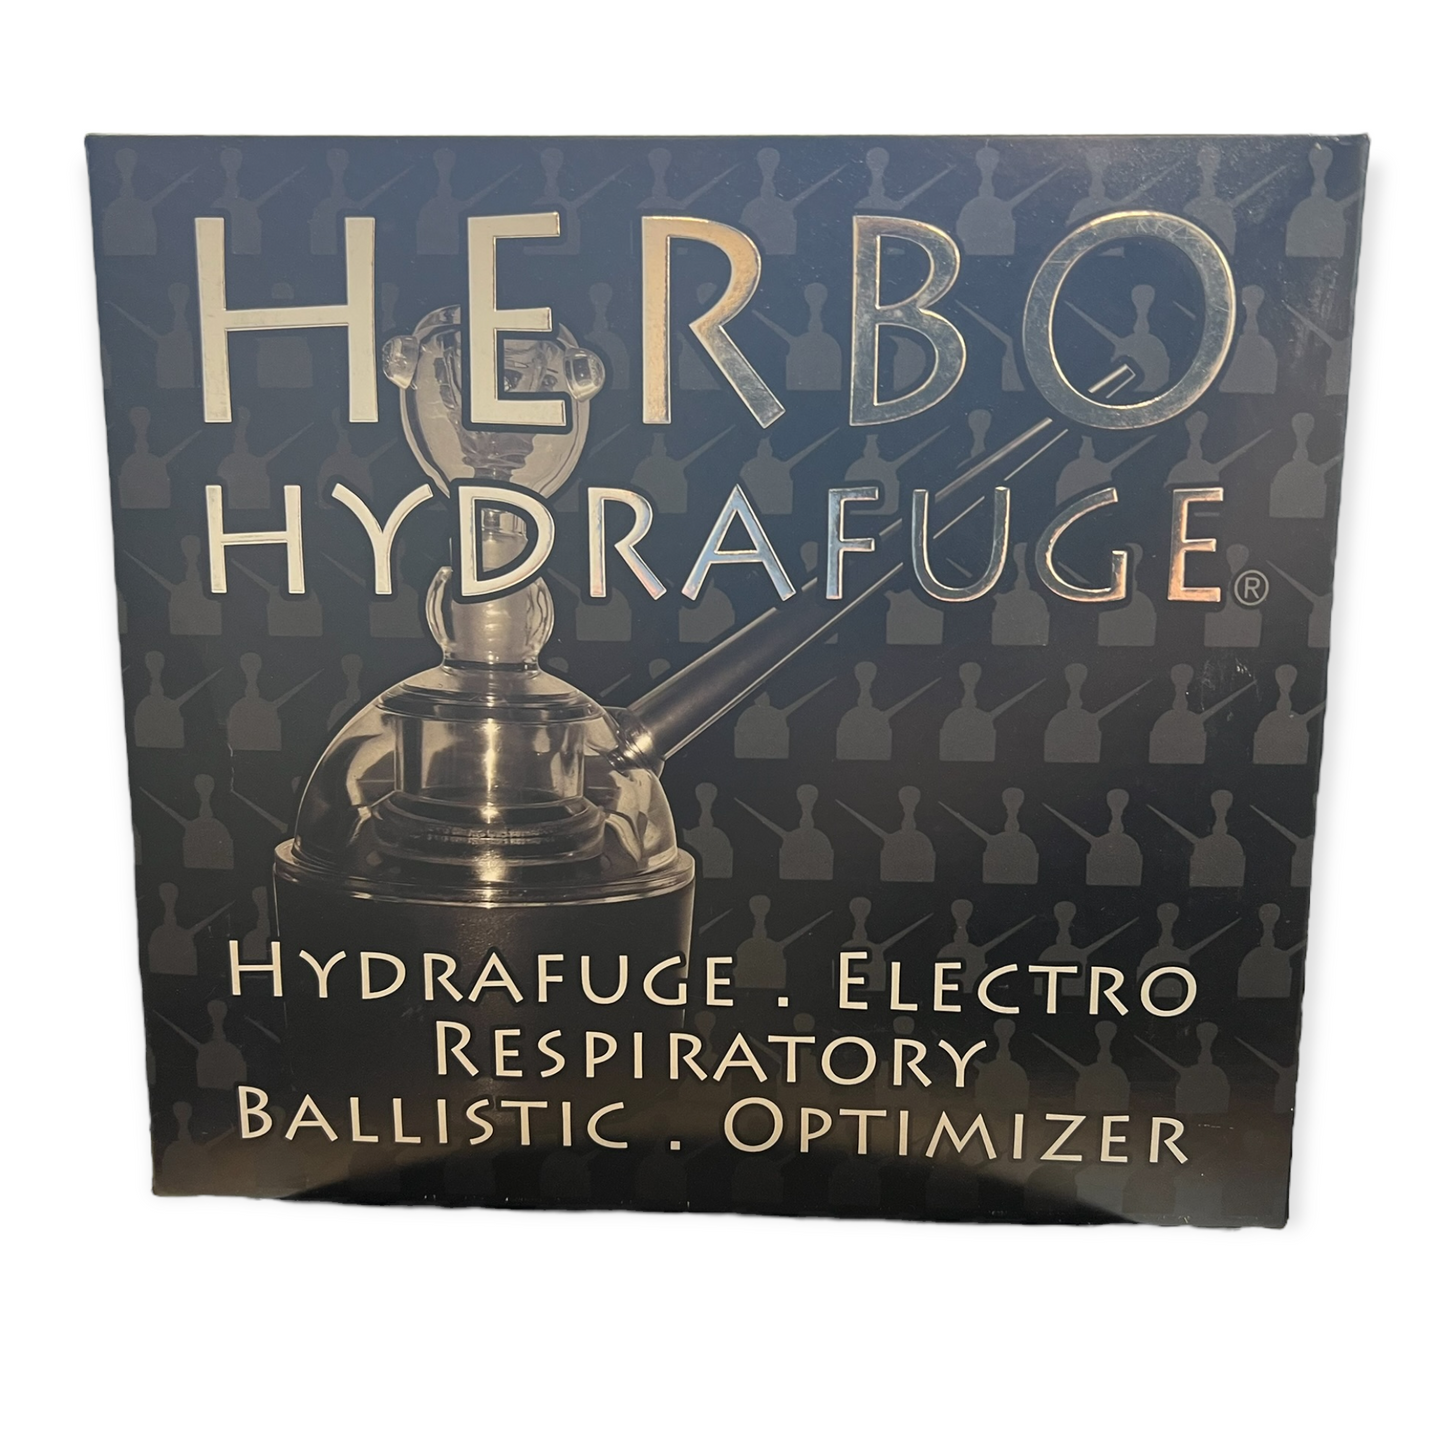 Herbo Hydrofuge